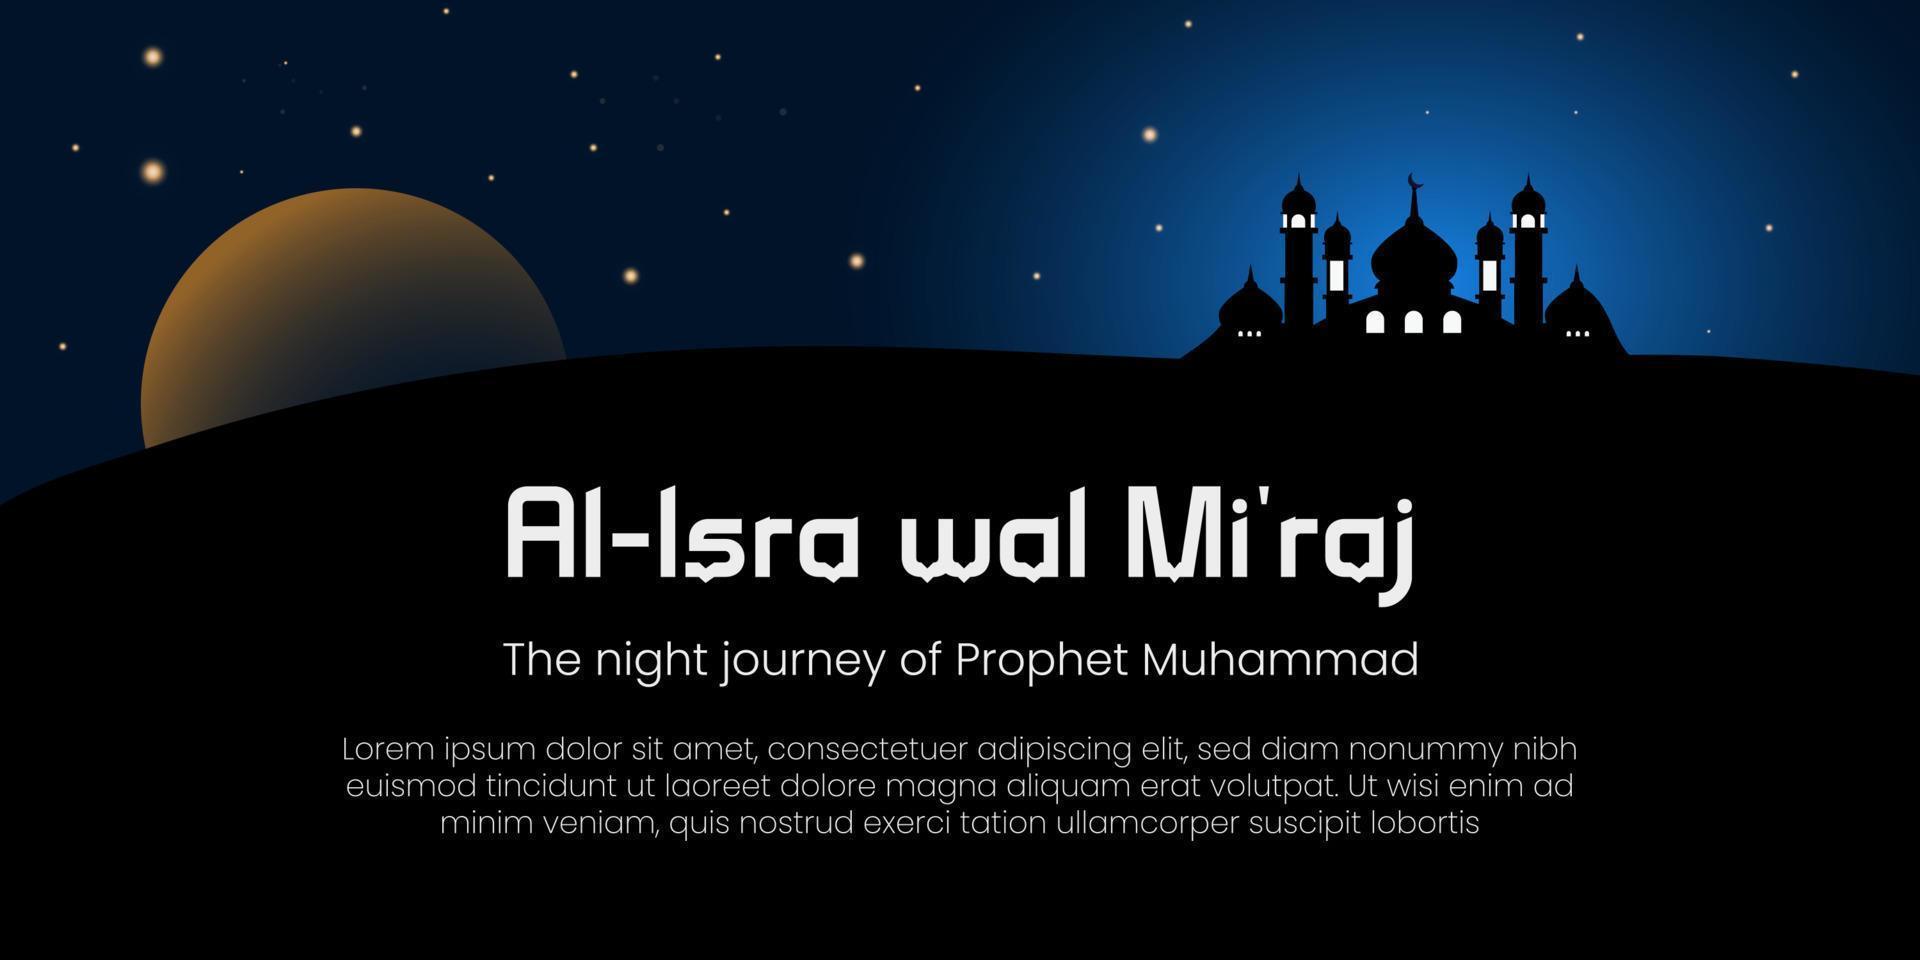 Al-Isra wal Mi'raj means The night journey of Prophet Muhammad. Banner, Poster, Greeting Card. Vector Illustration.